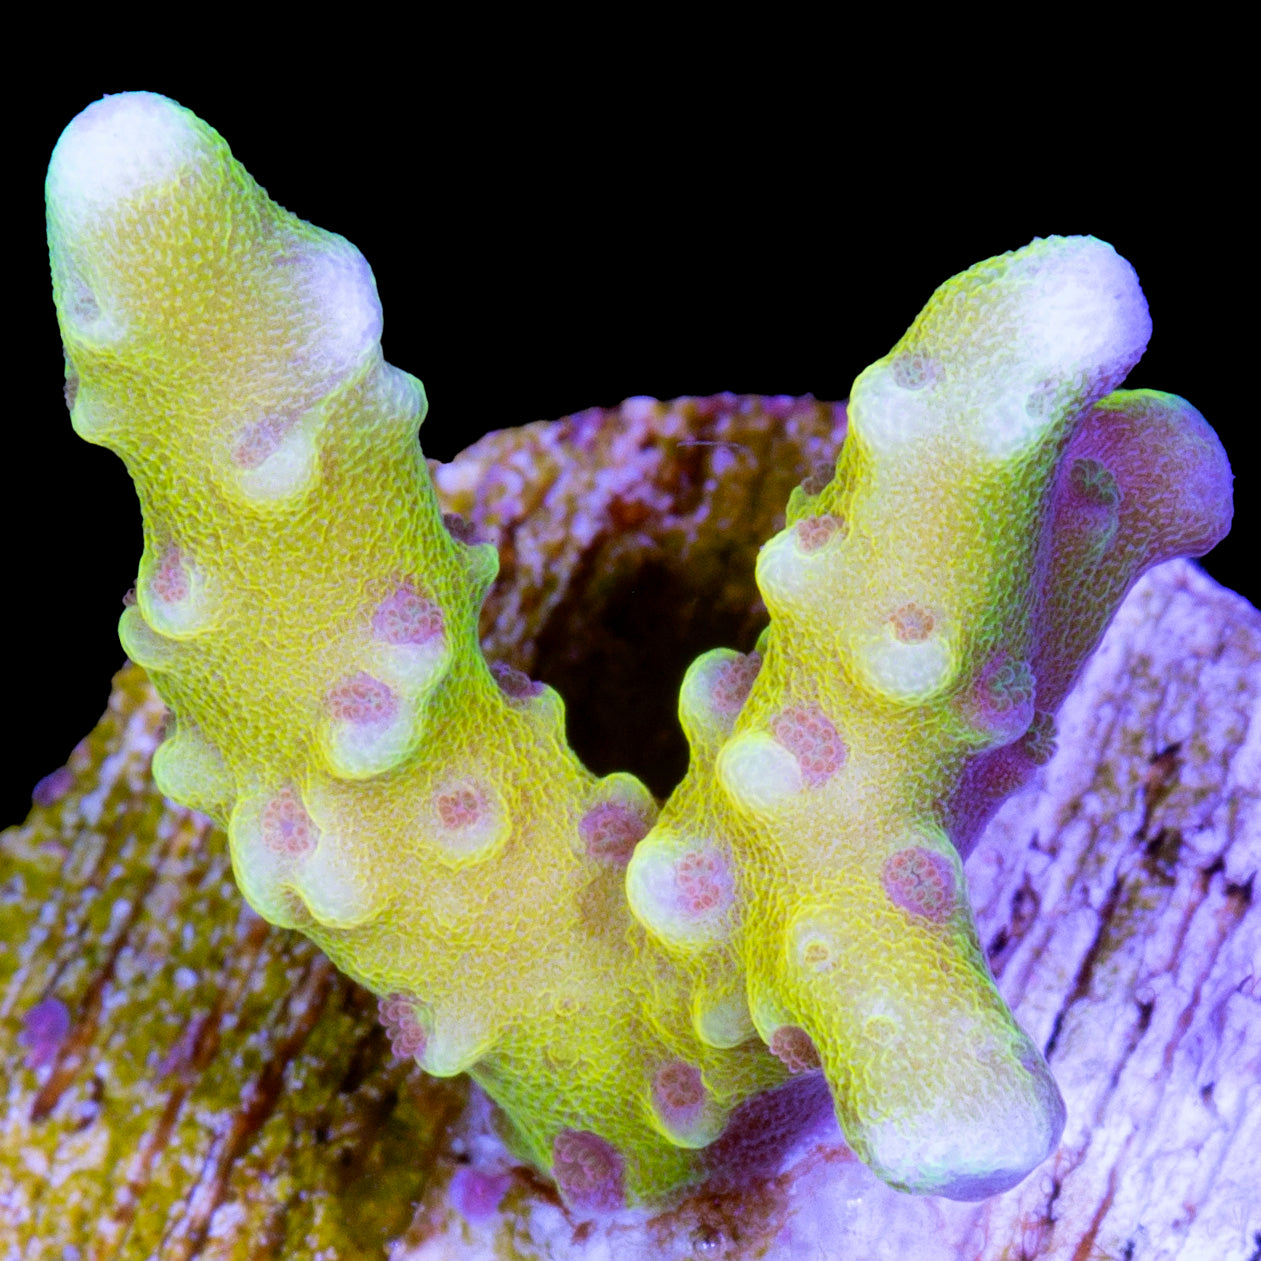 Goldenrod Anacropora Coral